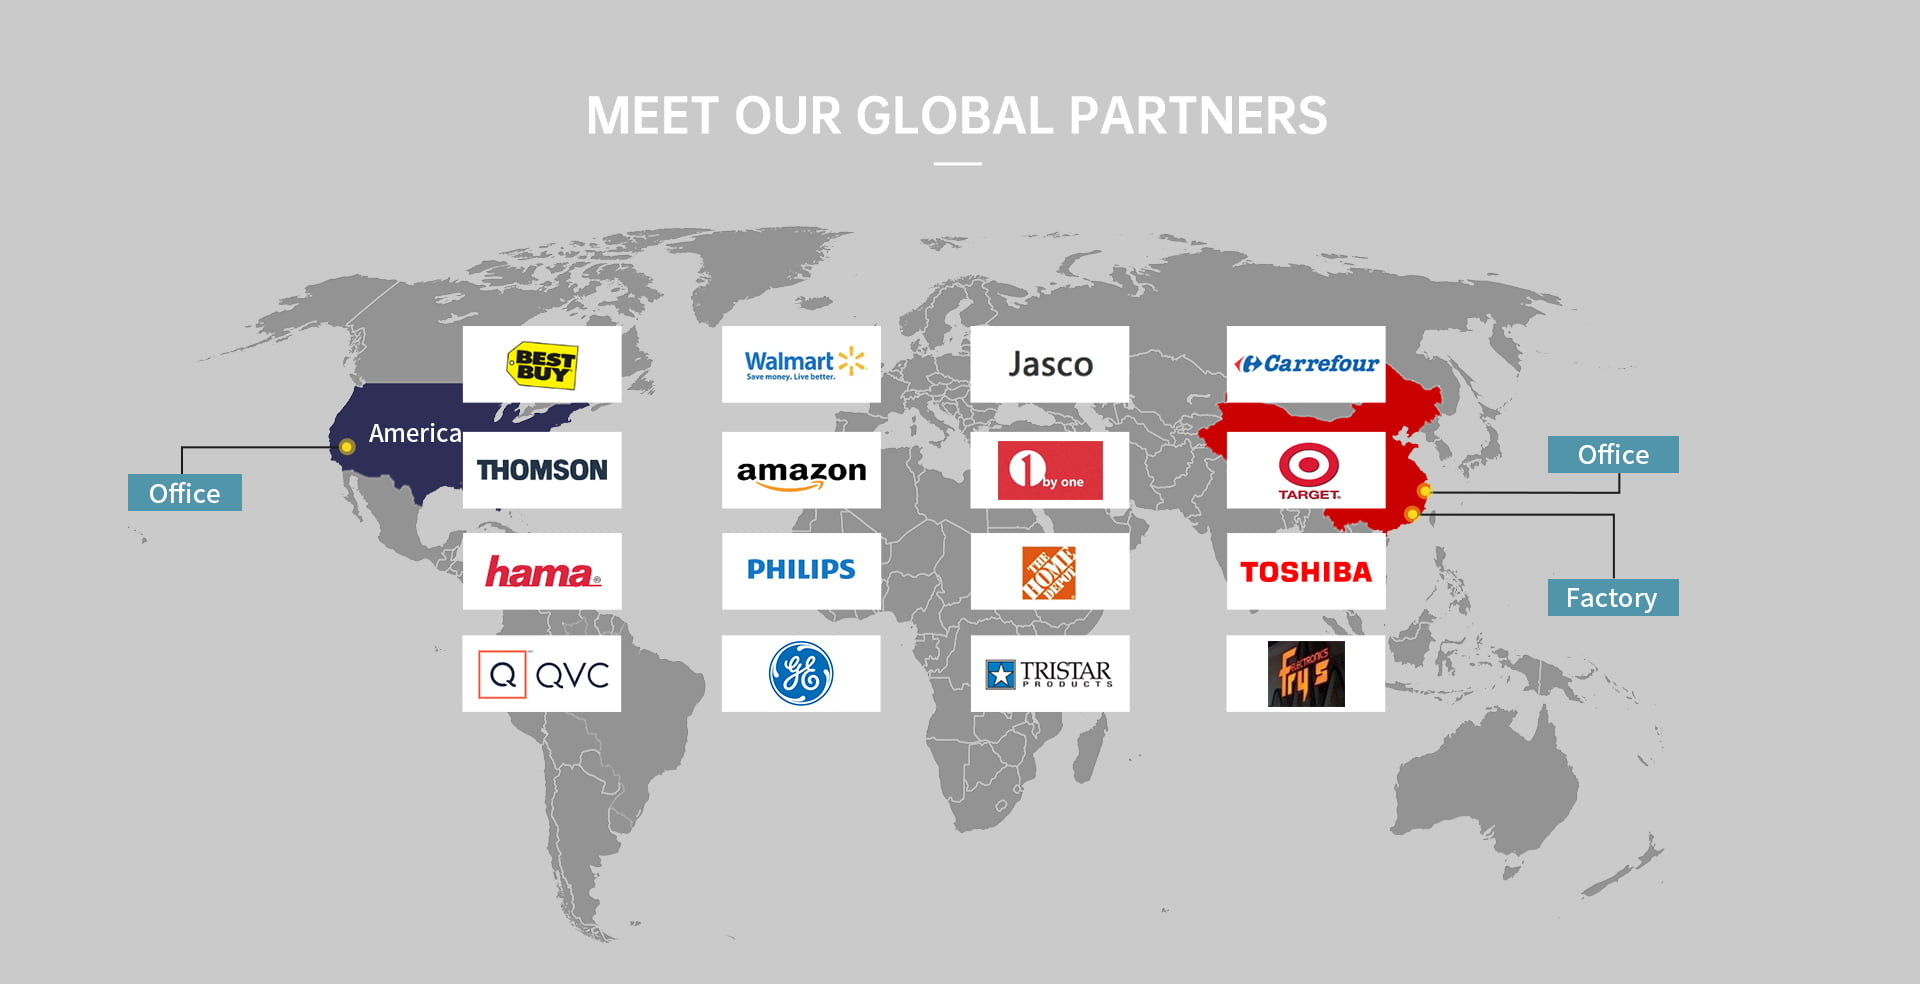 ANTOP's Global Partners